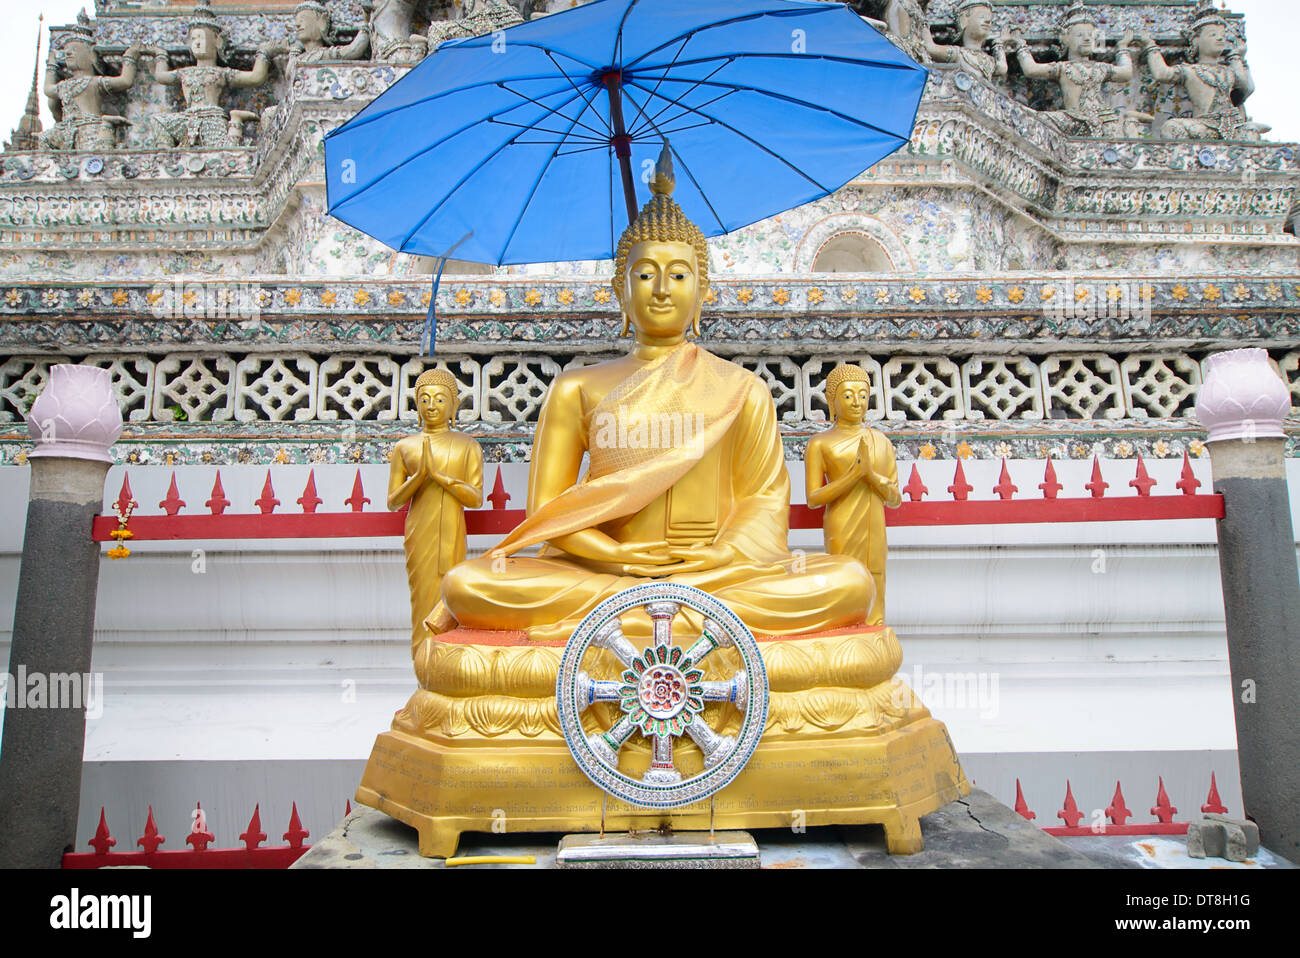 3 Buddha golden statues under a blue umbrella at Wat Arun temple, Bangkok, Thailand Stock Photo